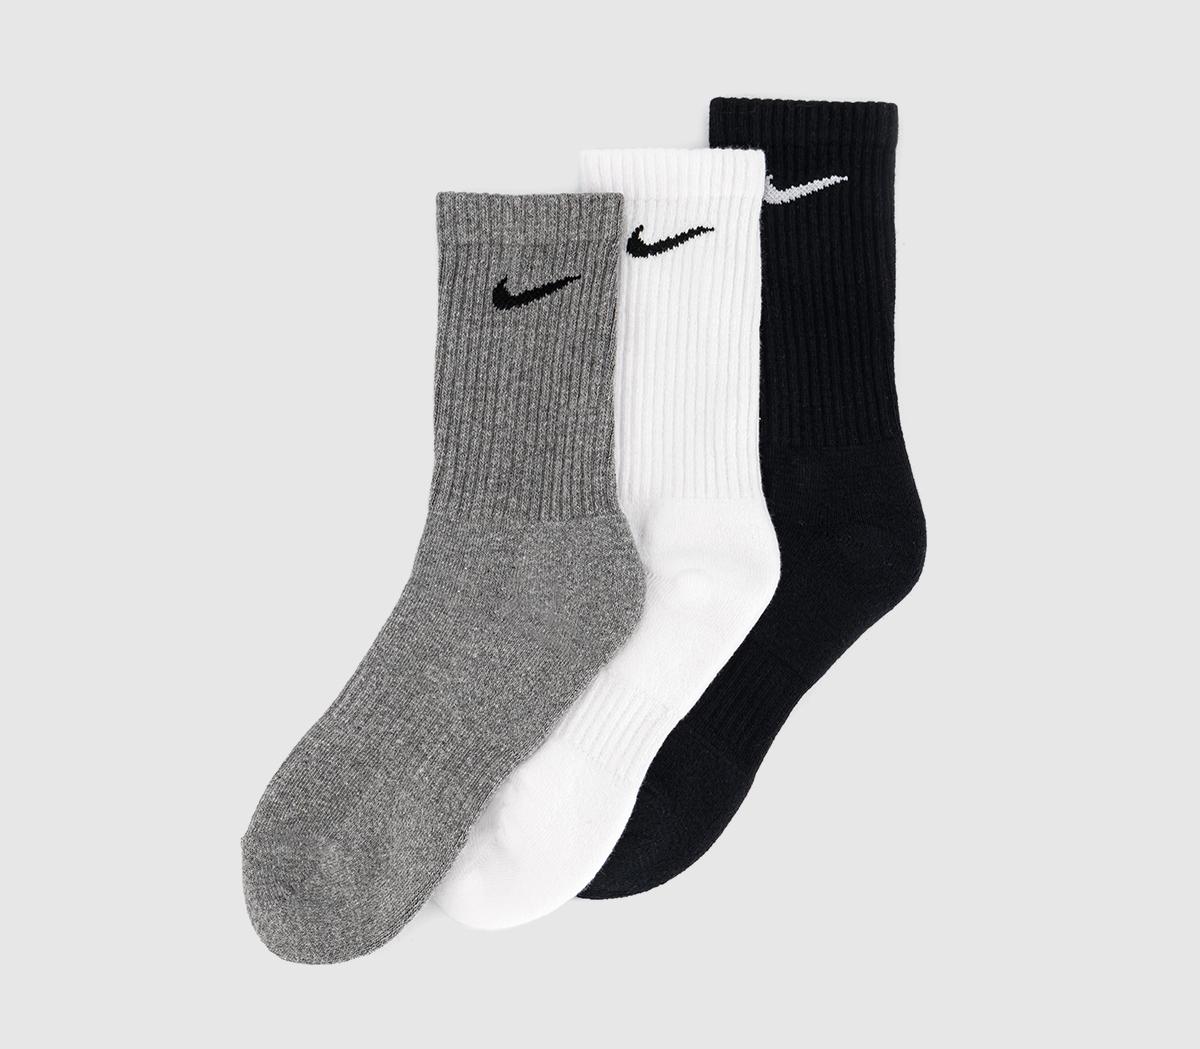 NikeNike Dri-fit Cushion Crew Socks 3 PackWhite Grey Black